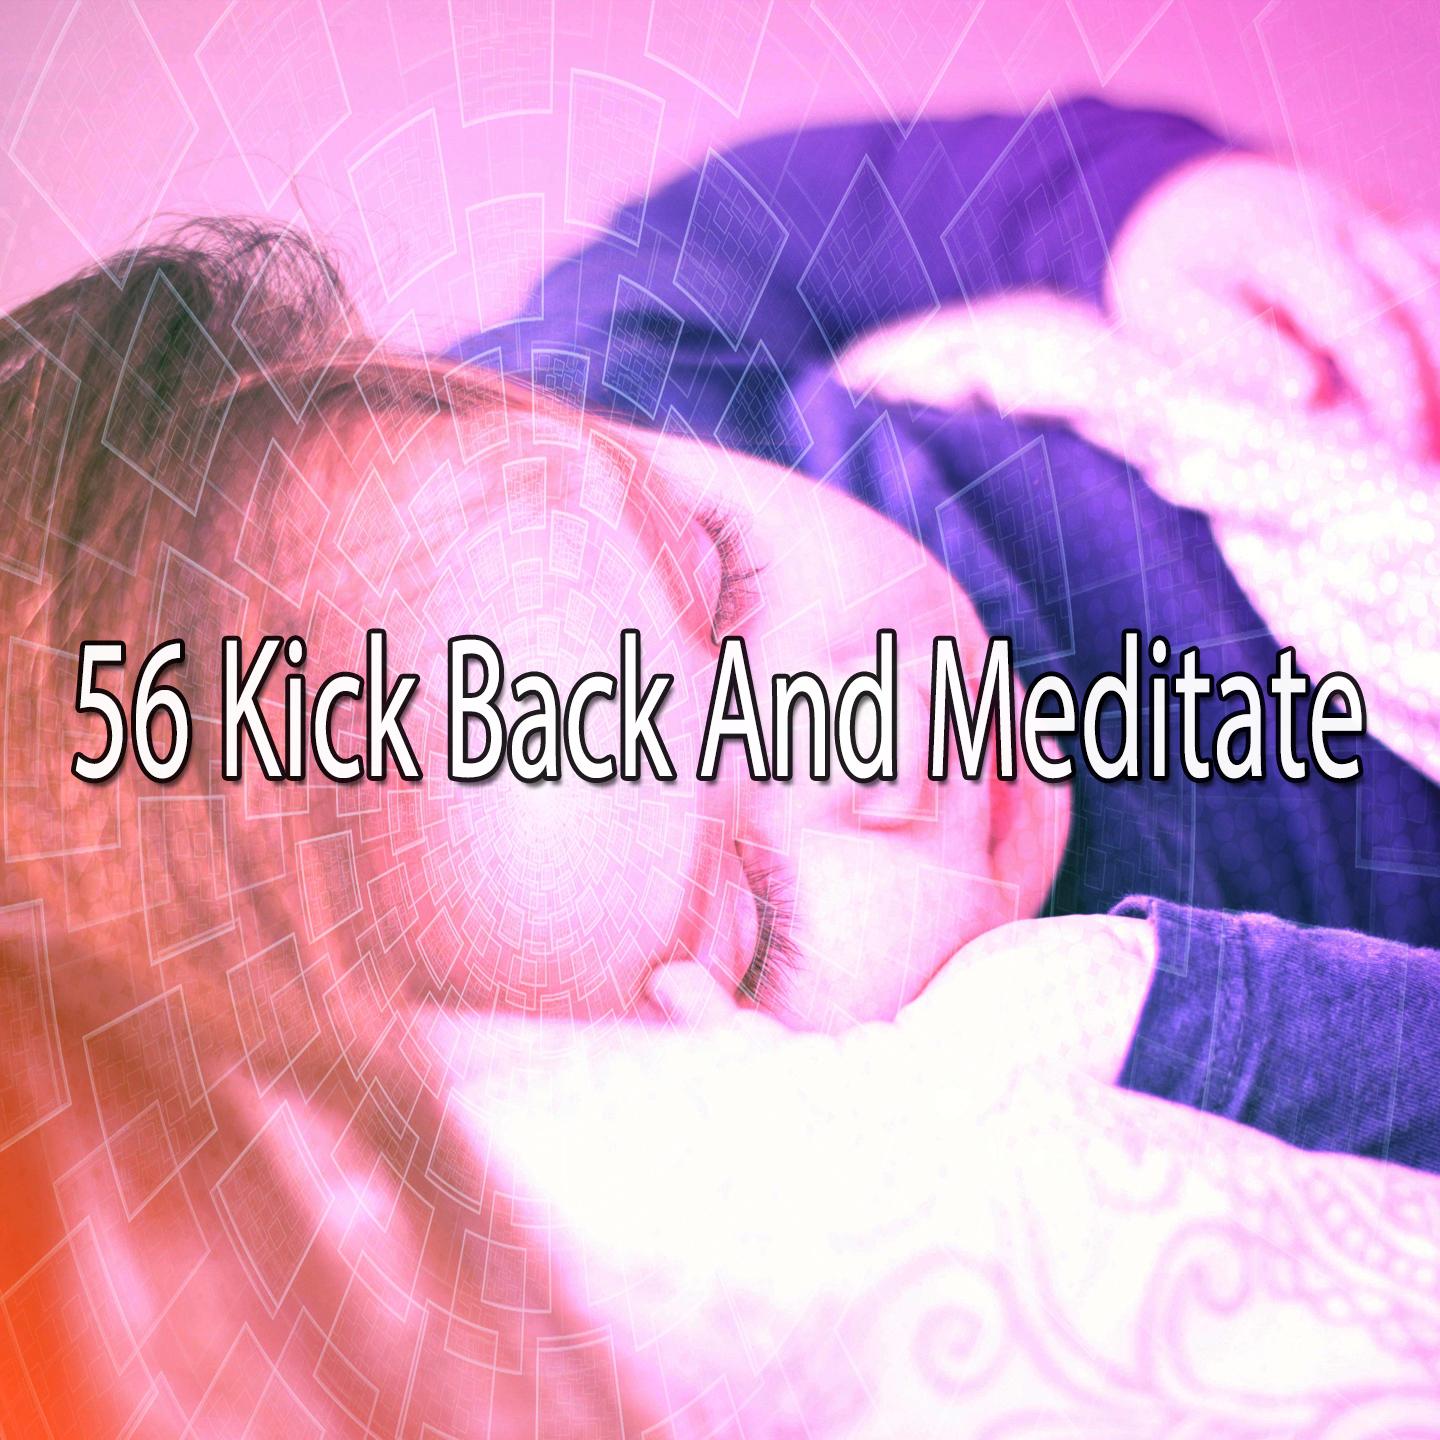 56 Kick Back and Meditate